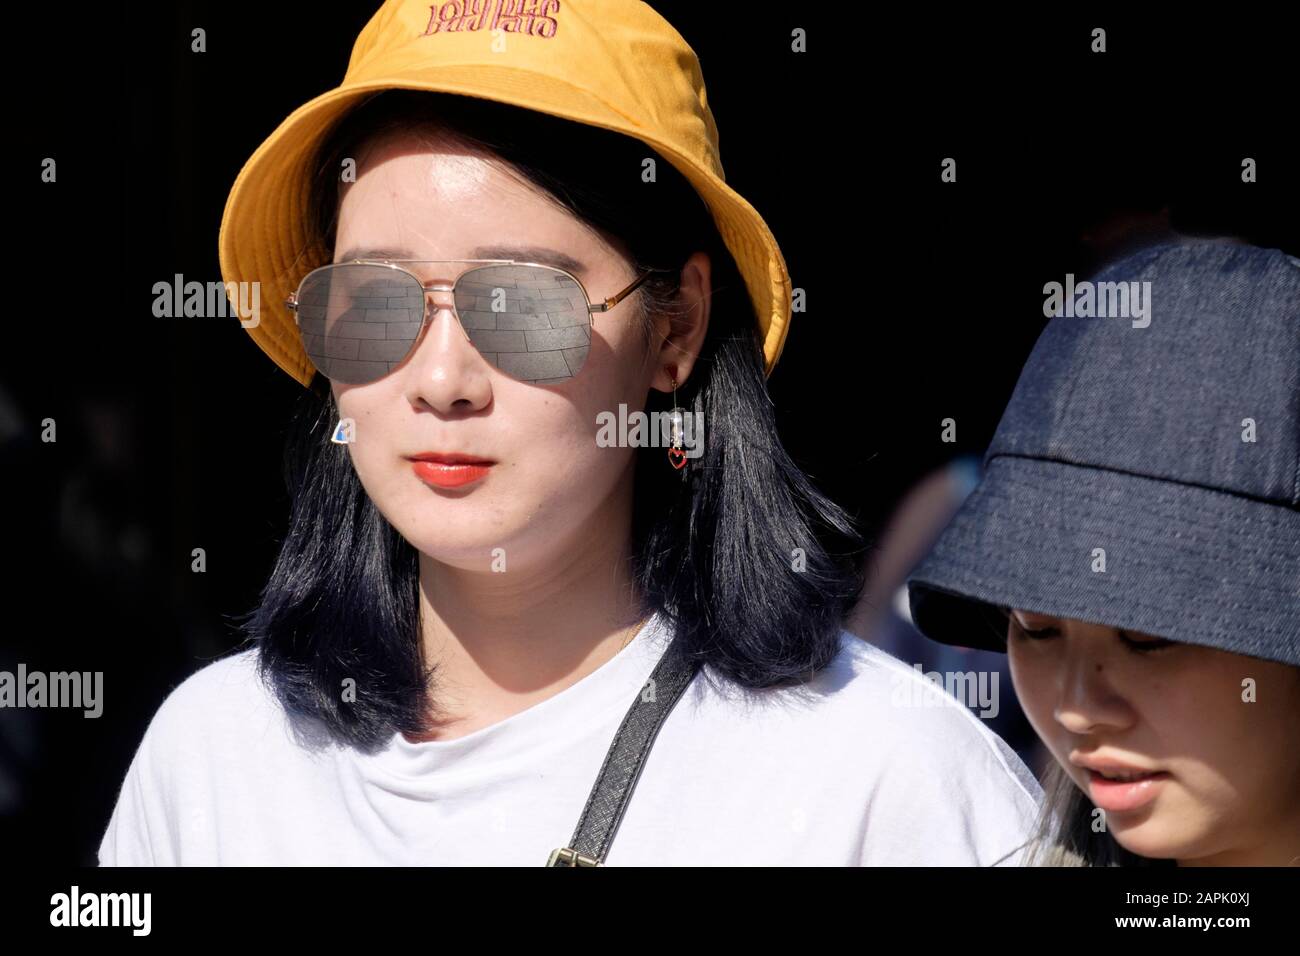 London street:  female, 20s, ethnic Chinese, sunglasses, hat. Stock Photo